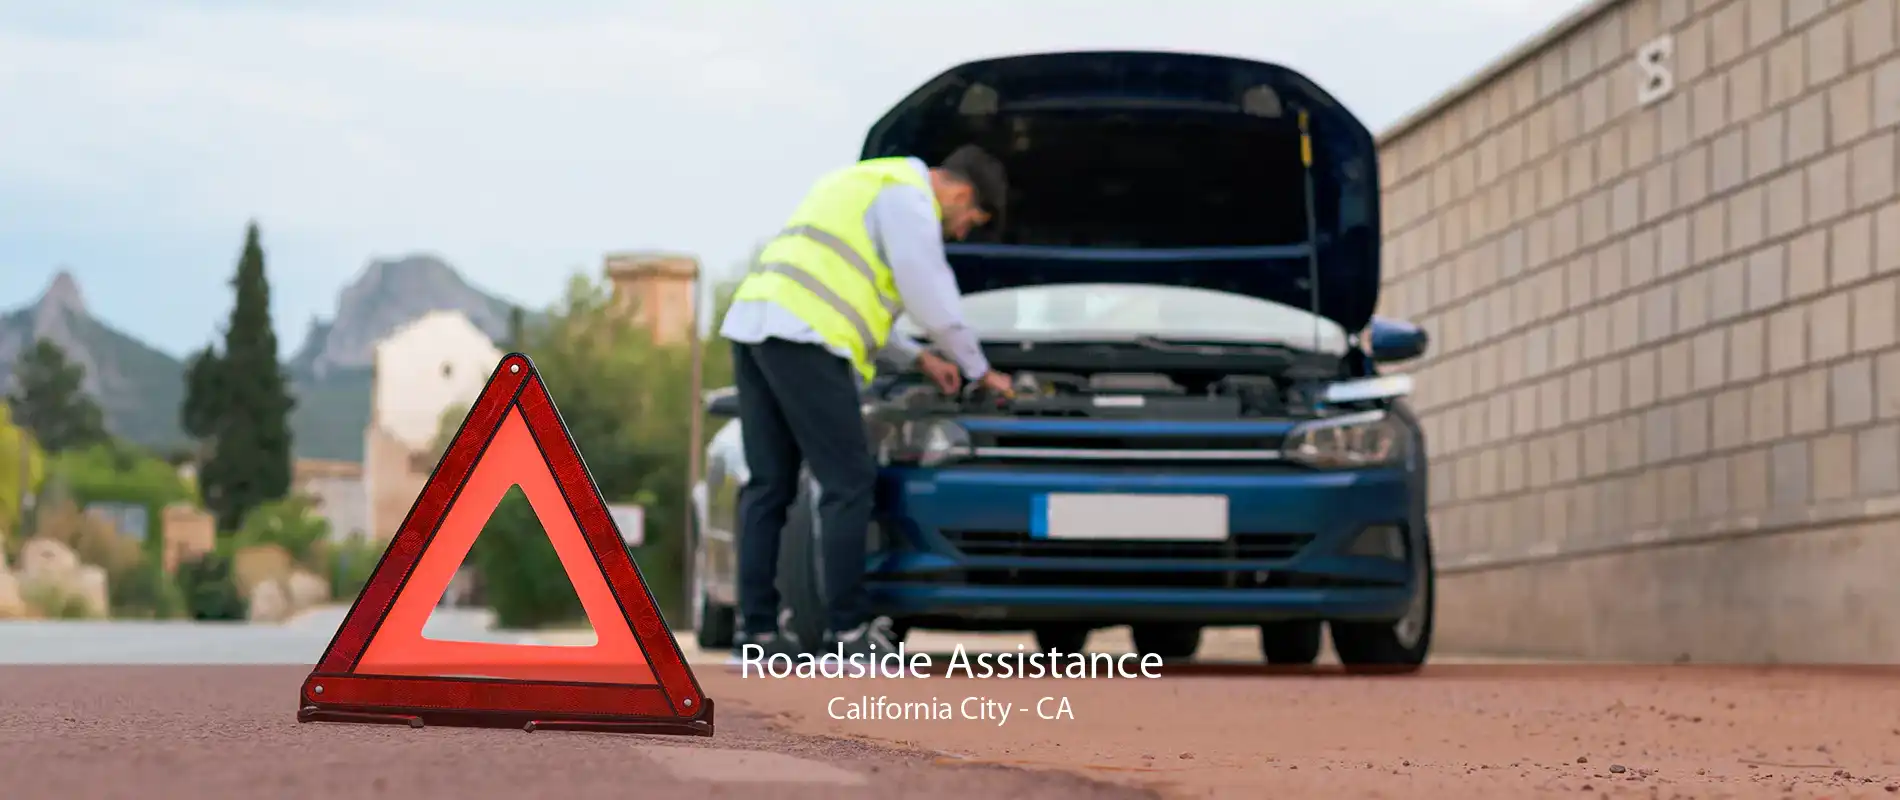 Roadside Assistance California City - CA